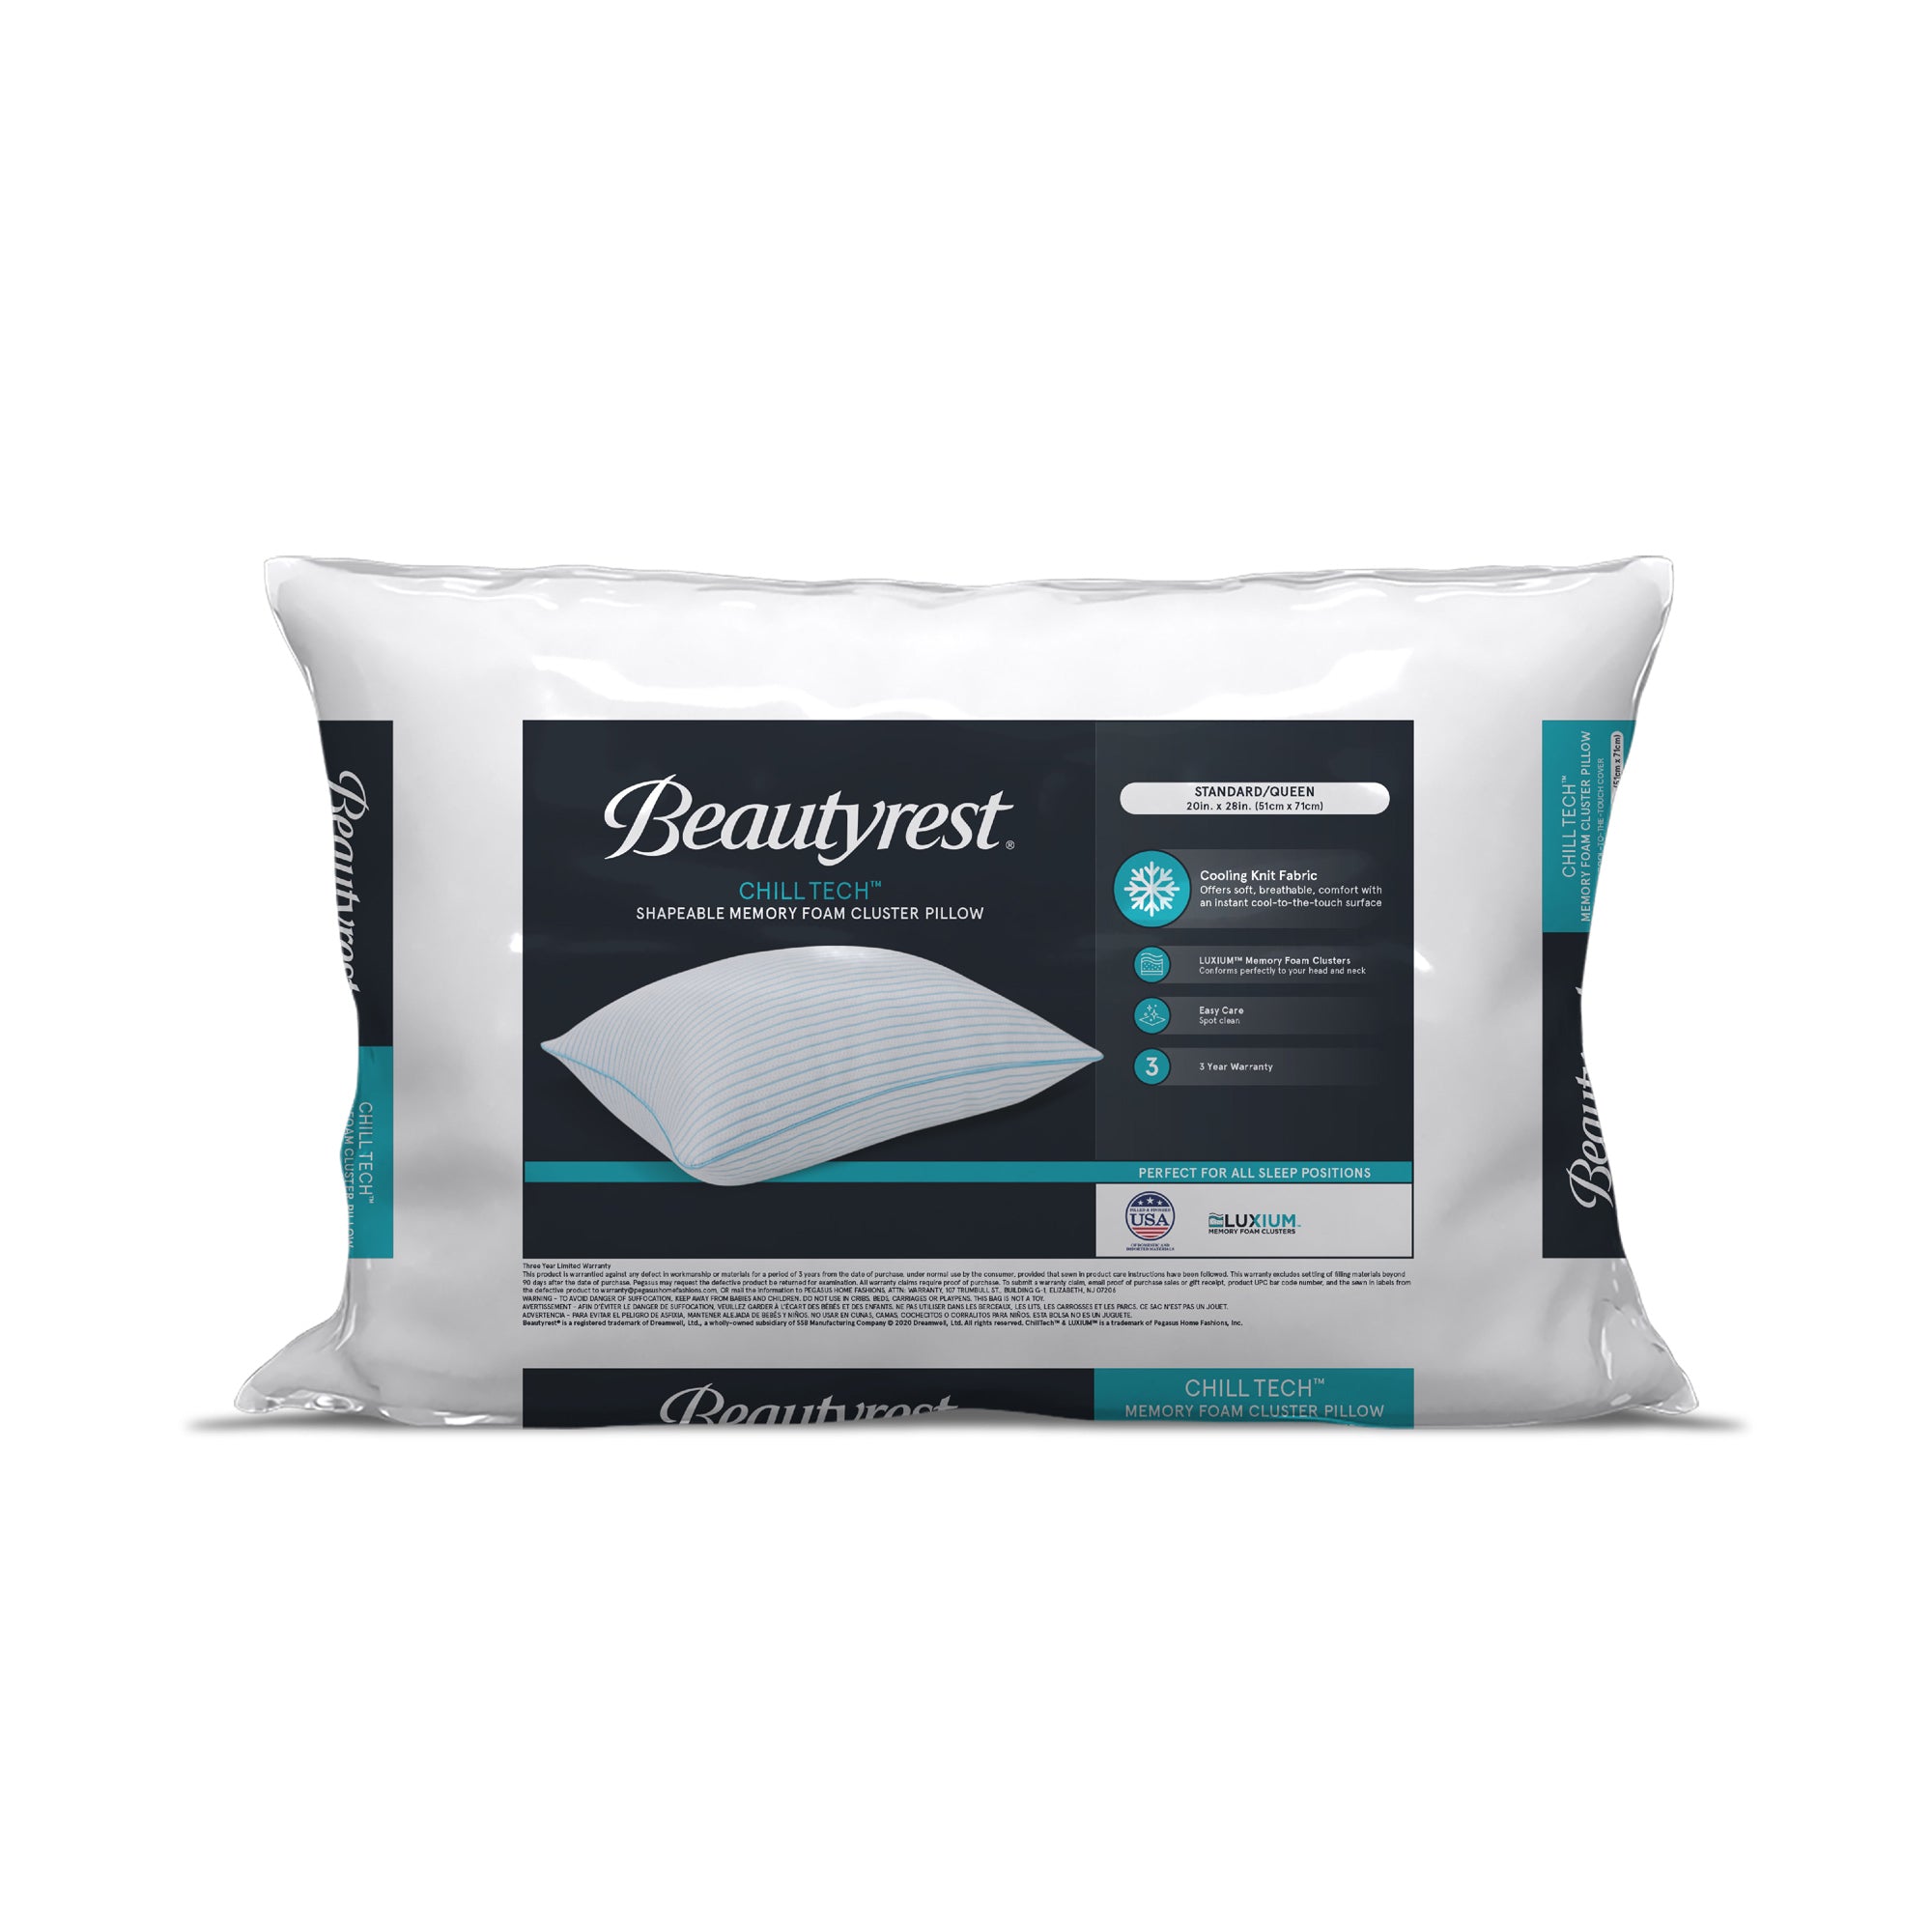 Linenspa Essentials 2 Pack Shredded Memory Foam Pillows - On Sale